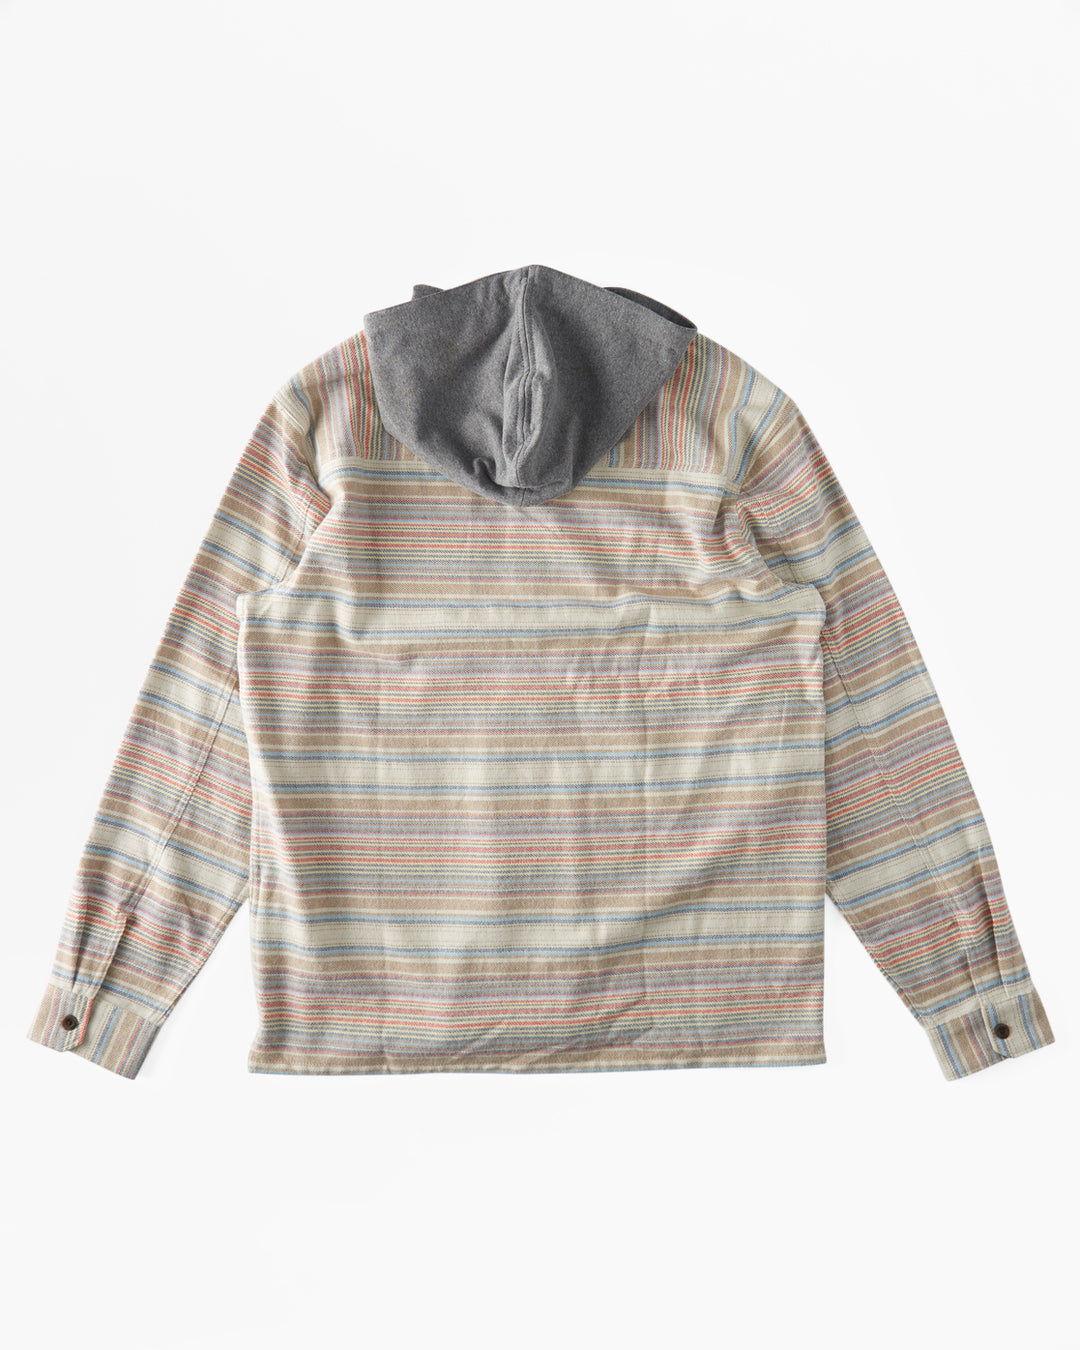 Billabong Baja Hooded Flannel Shirt - Oyster - Sun Diego Boardshop